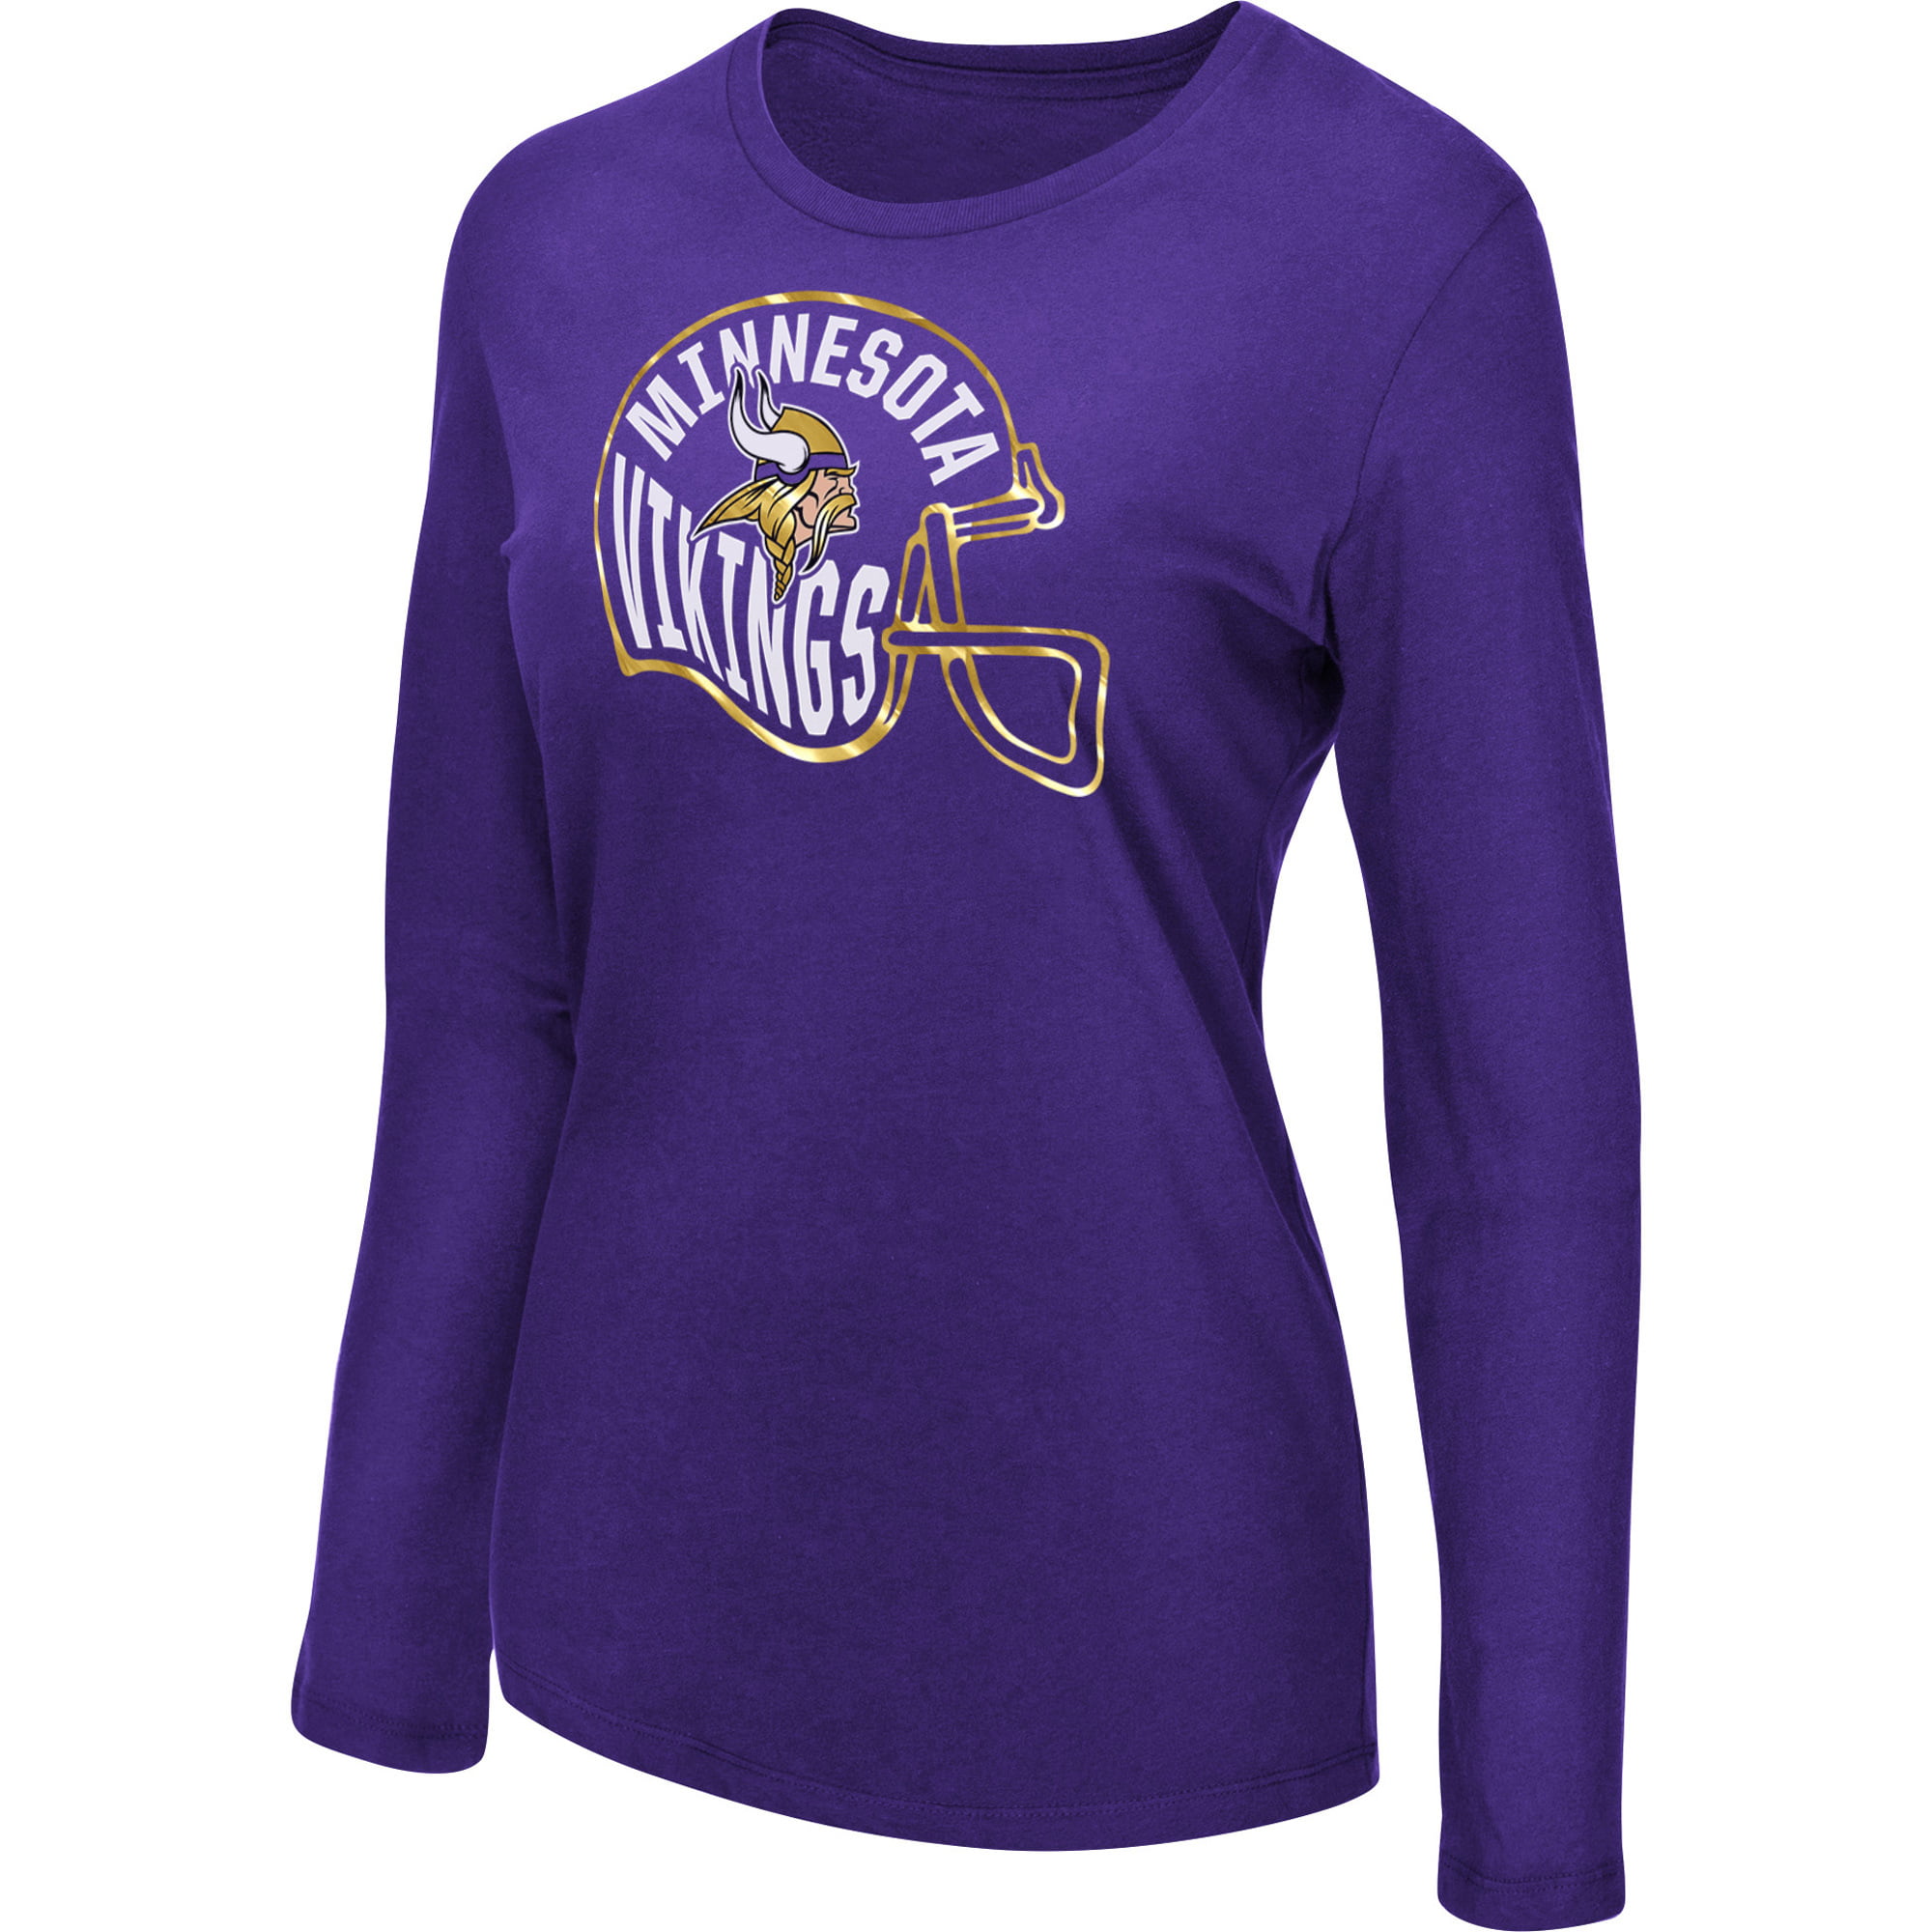 Minnesota Vikings Team Shop - Walmart.com